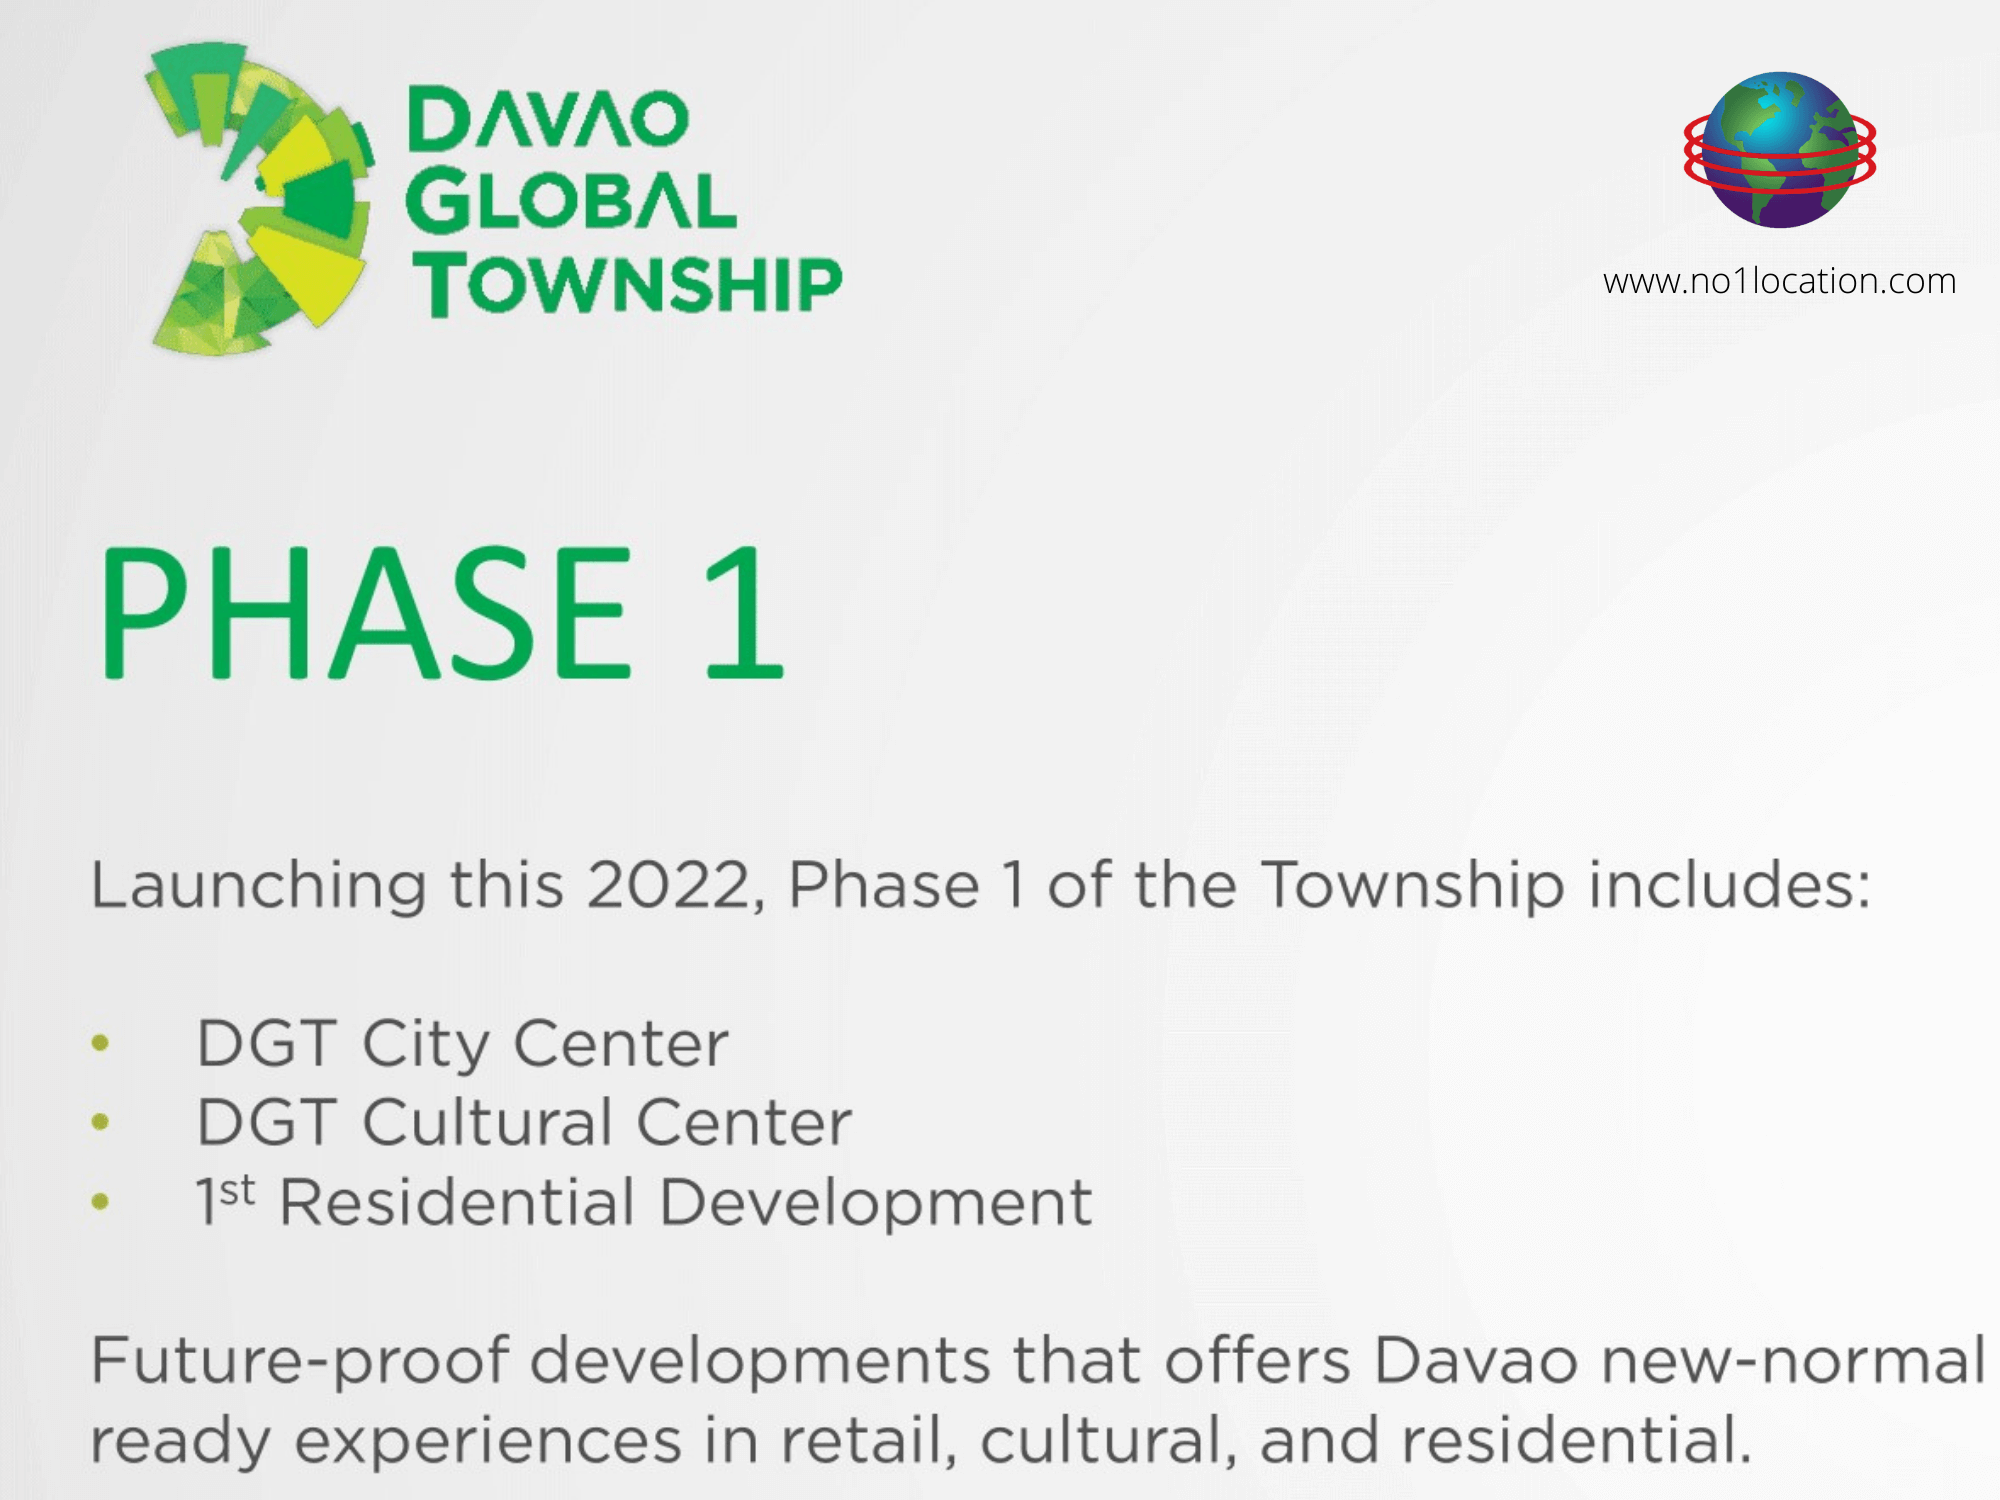 davao global township phase 1